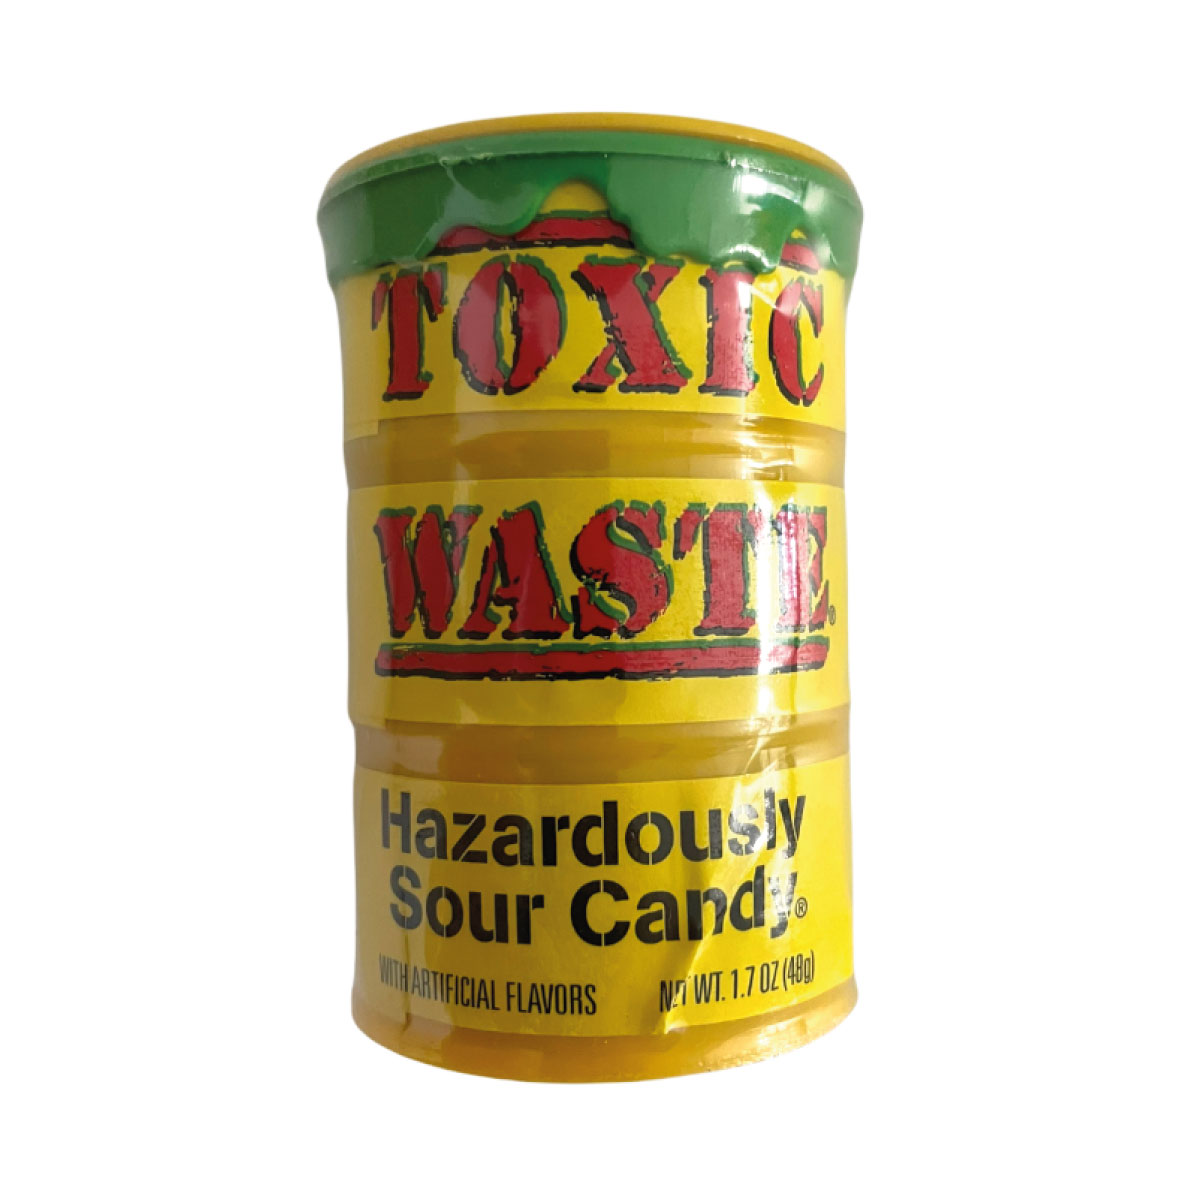 Toxic Waste, Hazardously Sour Candy 48g